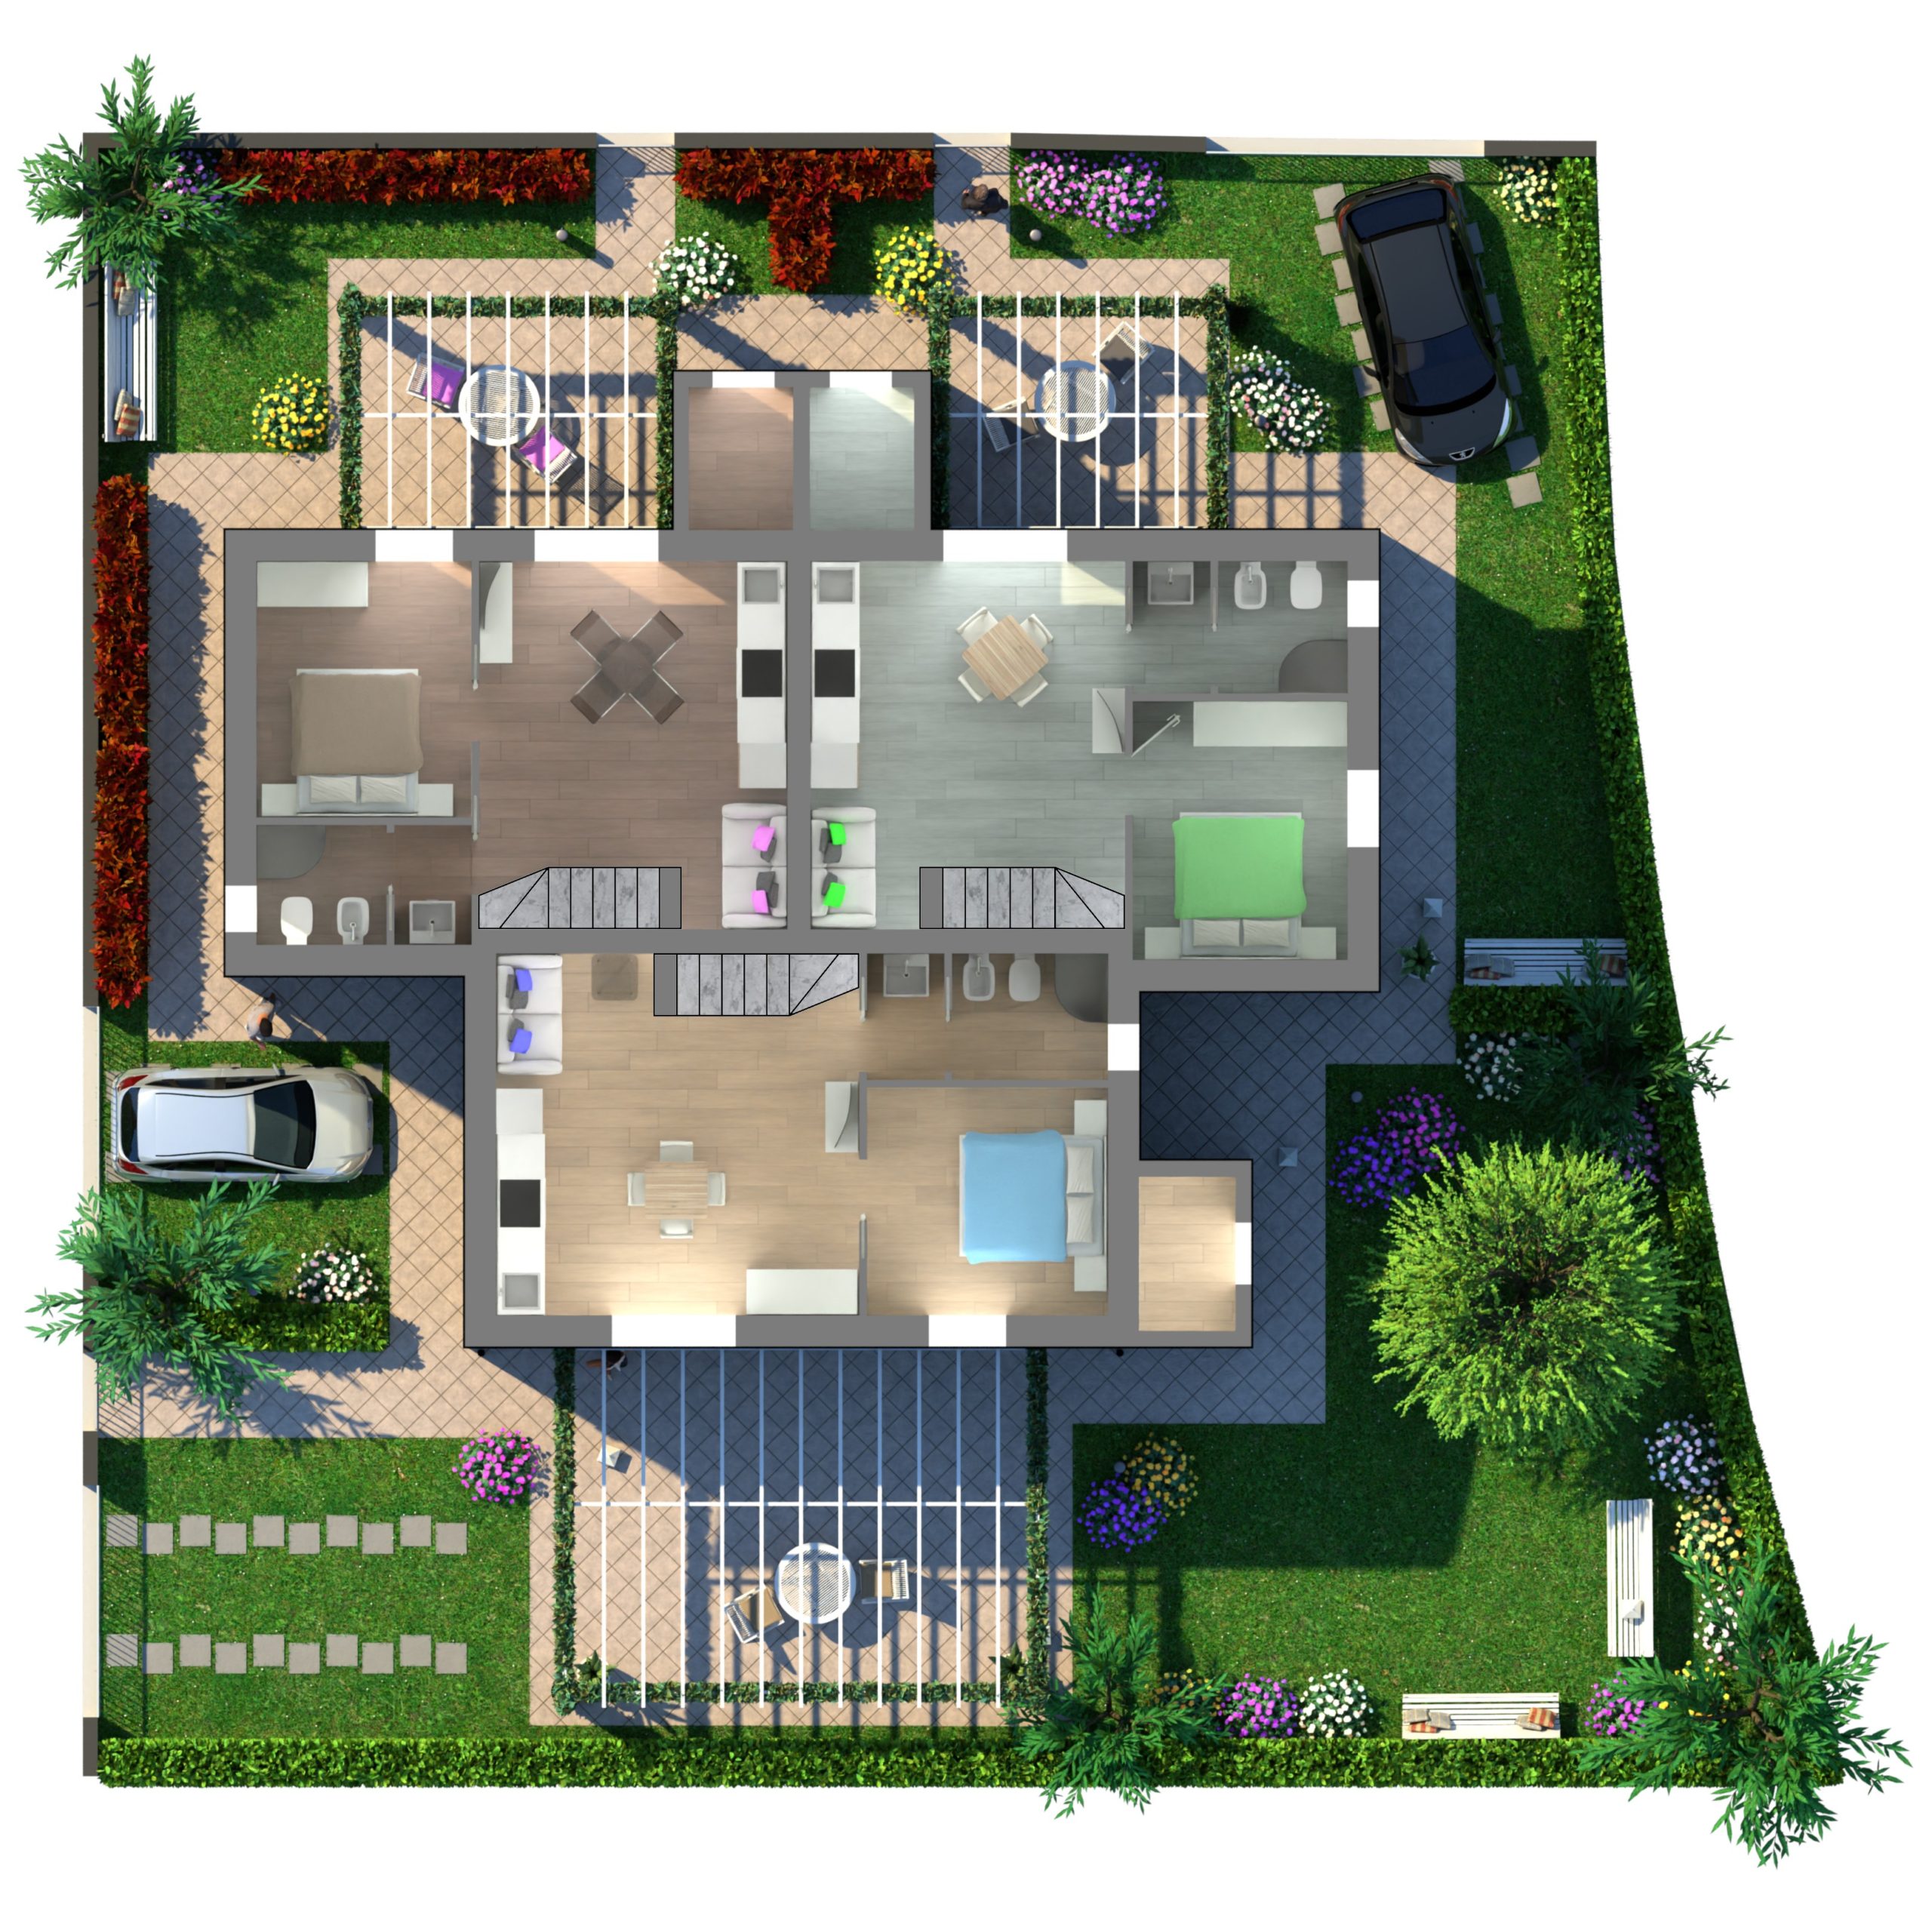 https://alavela.immobiliarerubboli.com/wp-content/uploads/2022/06/villa-gemini-lotto-24-PT-scaled.jpg